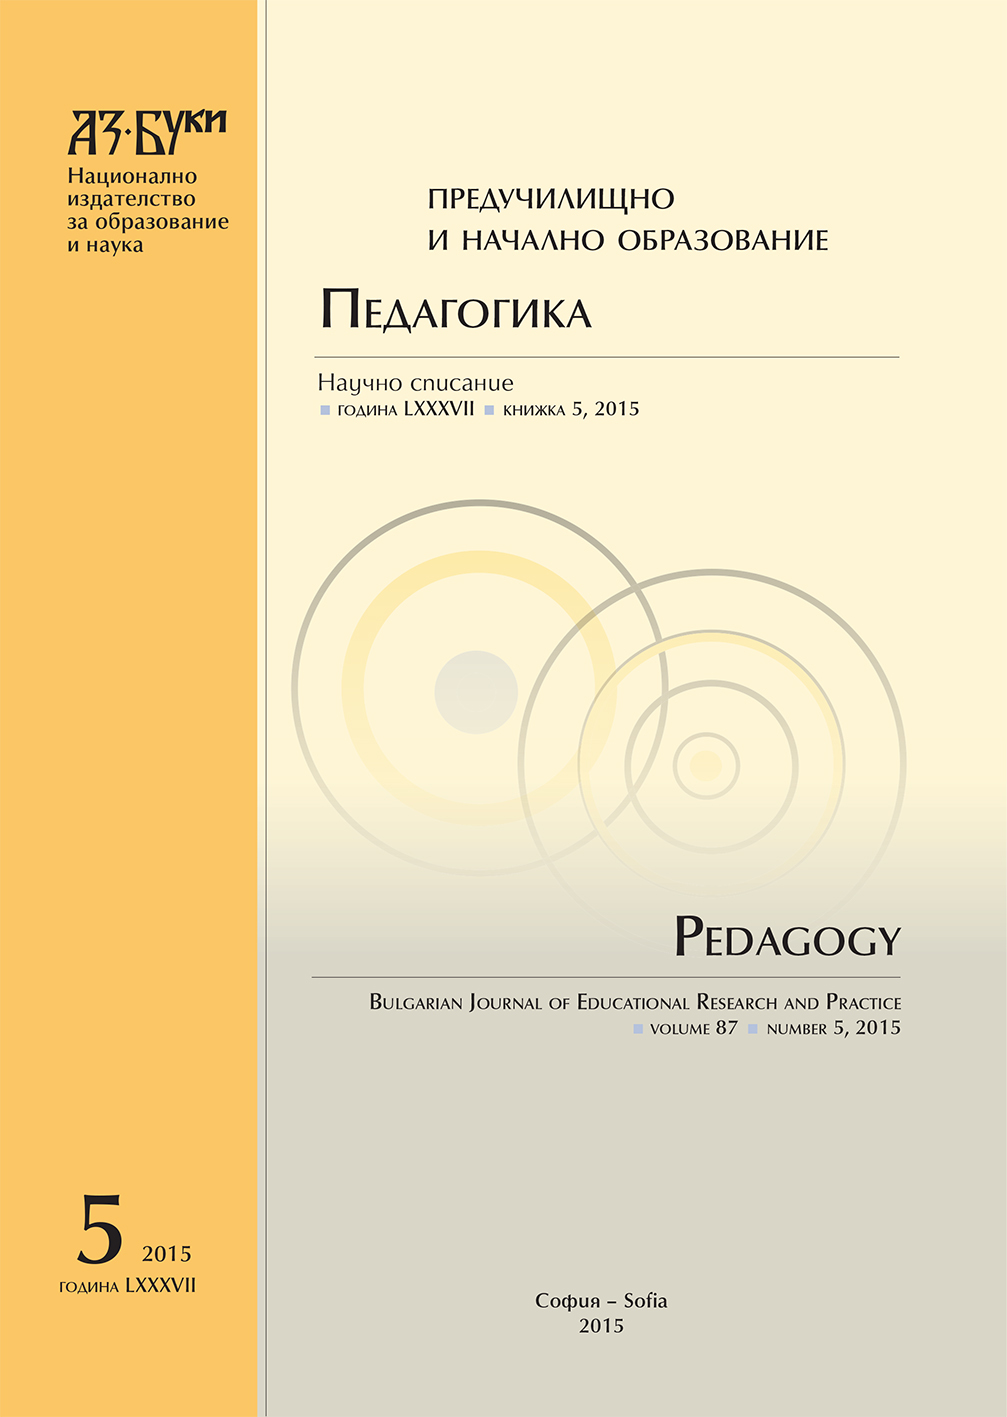 Petko Slaveikov’s Views on Education Cover Image